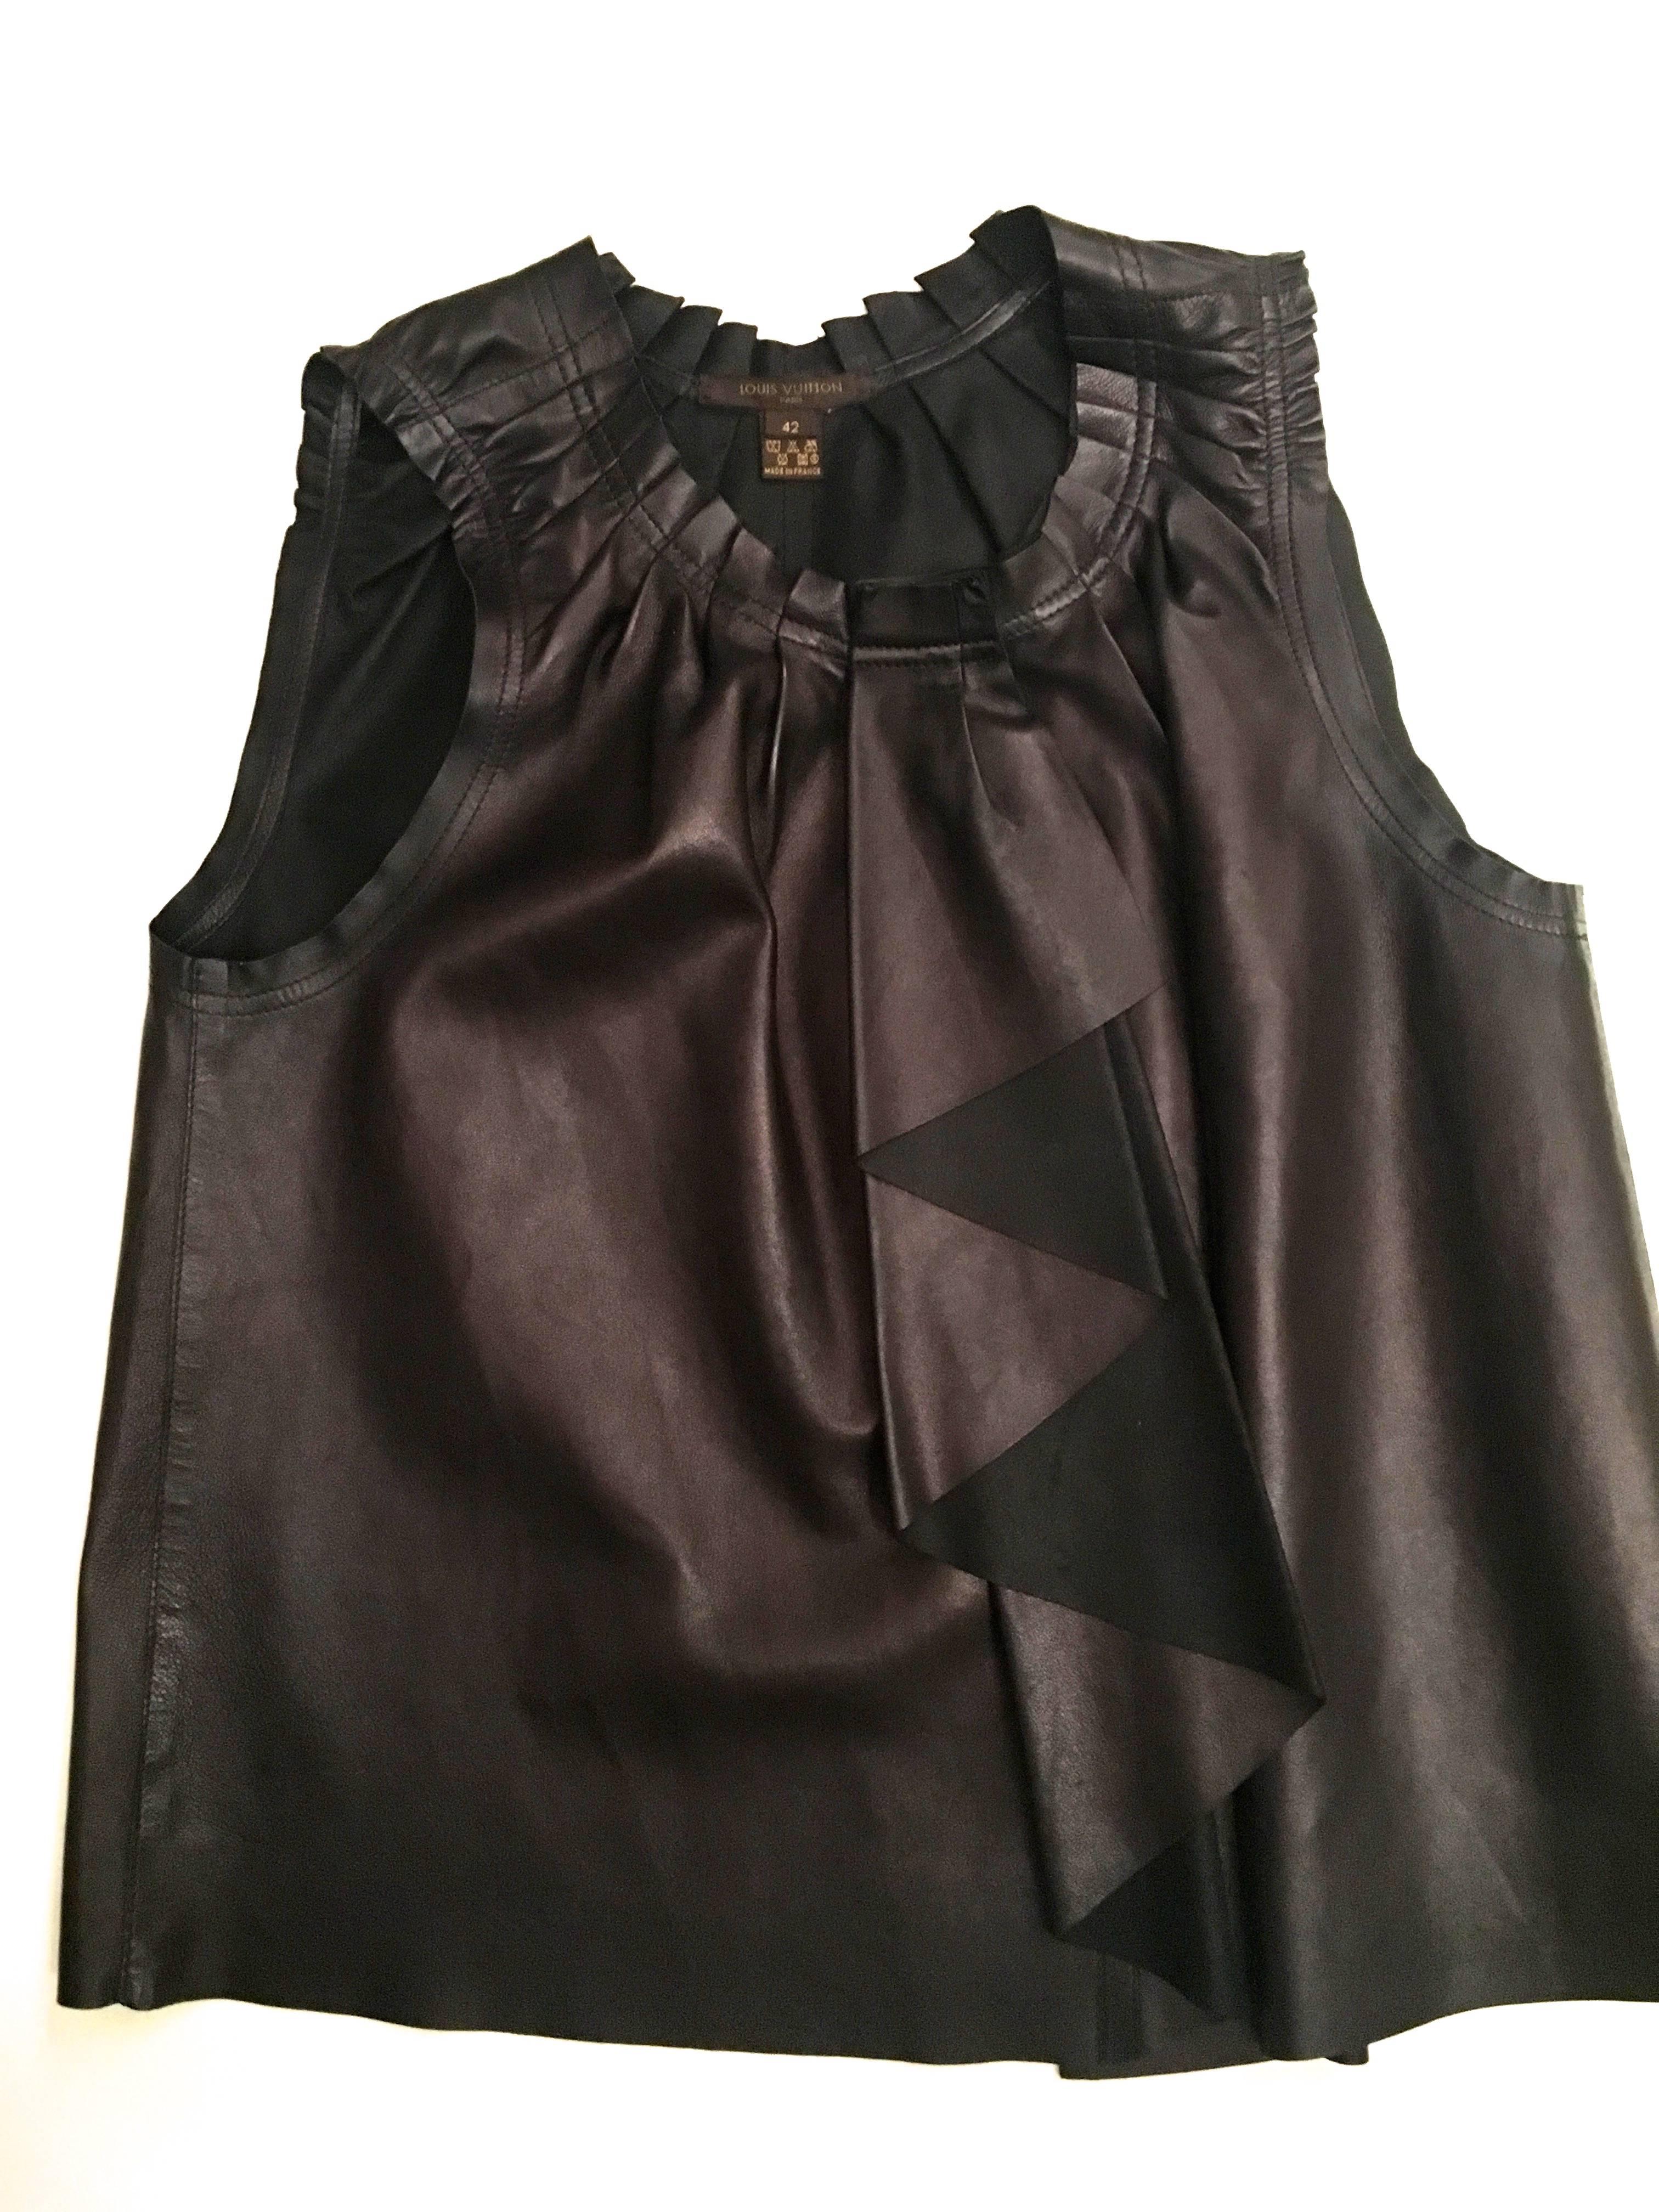 New Louis Vuitton Vest - 100% Leather - Dark Brown For Sale 5